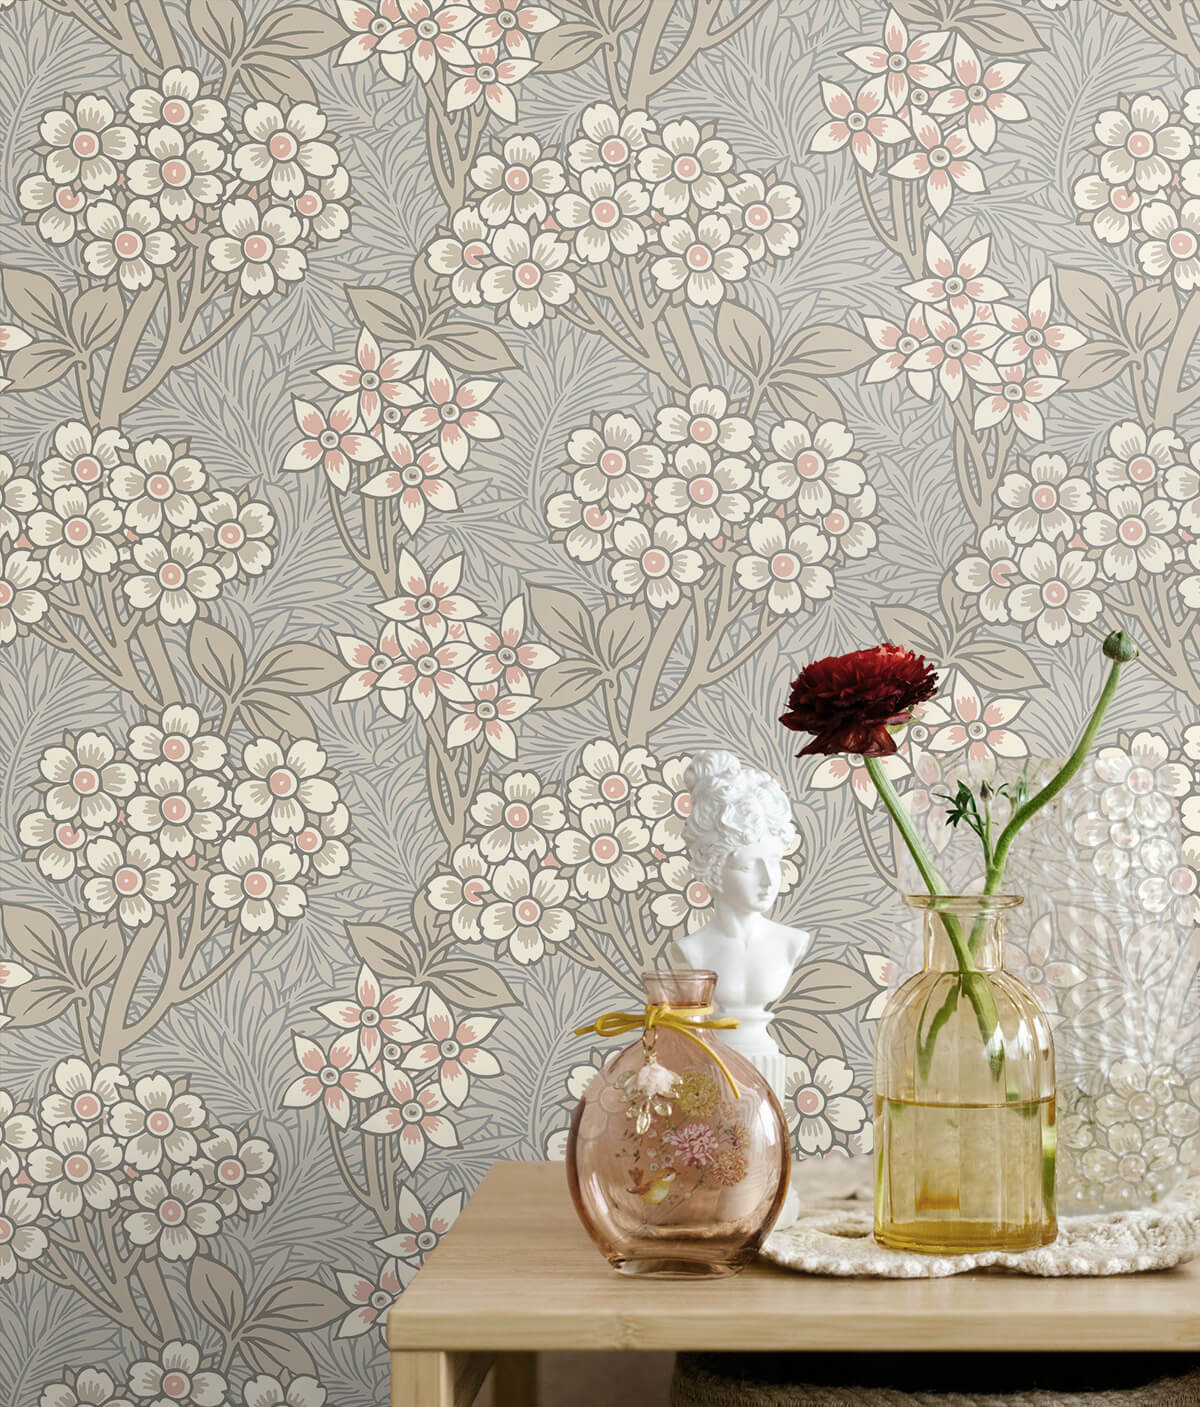 Seabrook Legacy Prints Floral Vine Wallpaper - Daydream Grey & Rose Petal